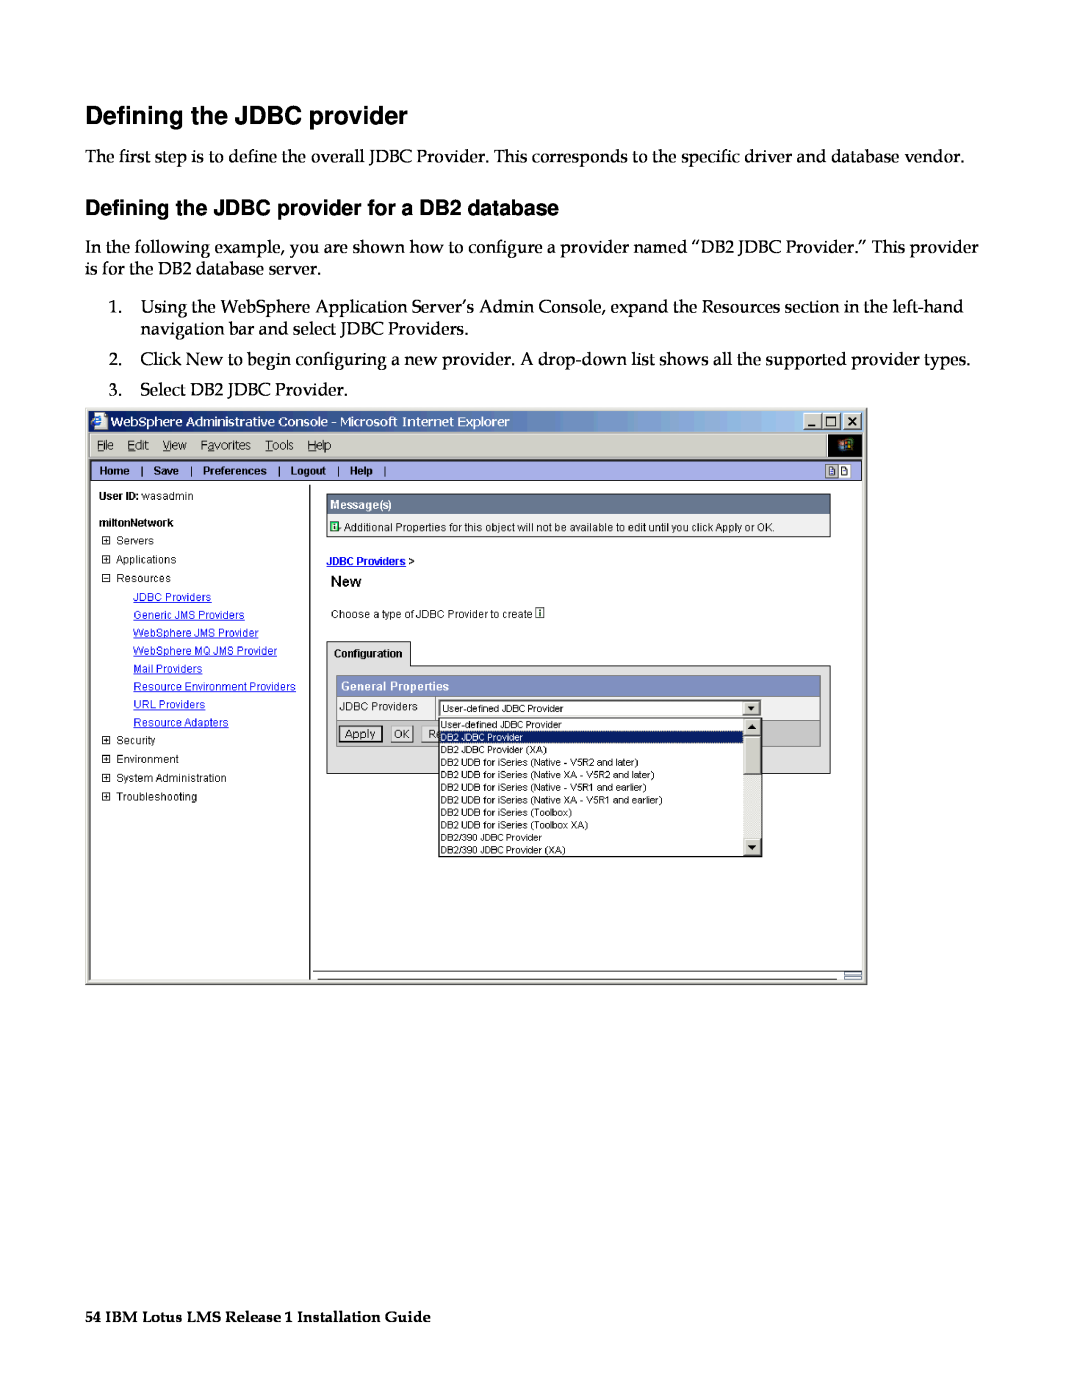 IBM G210-1784-00 manual Defining the JDBC provider for a DB2 database 